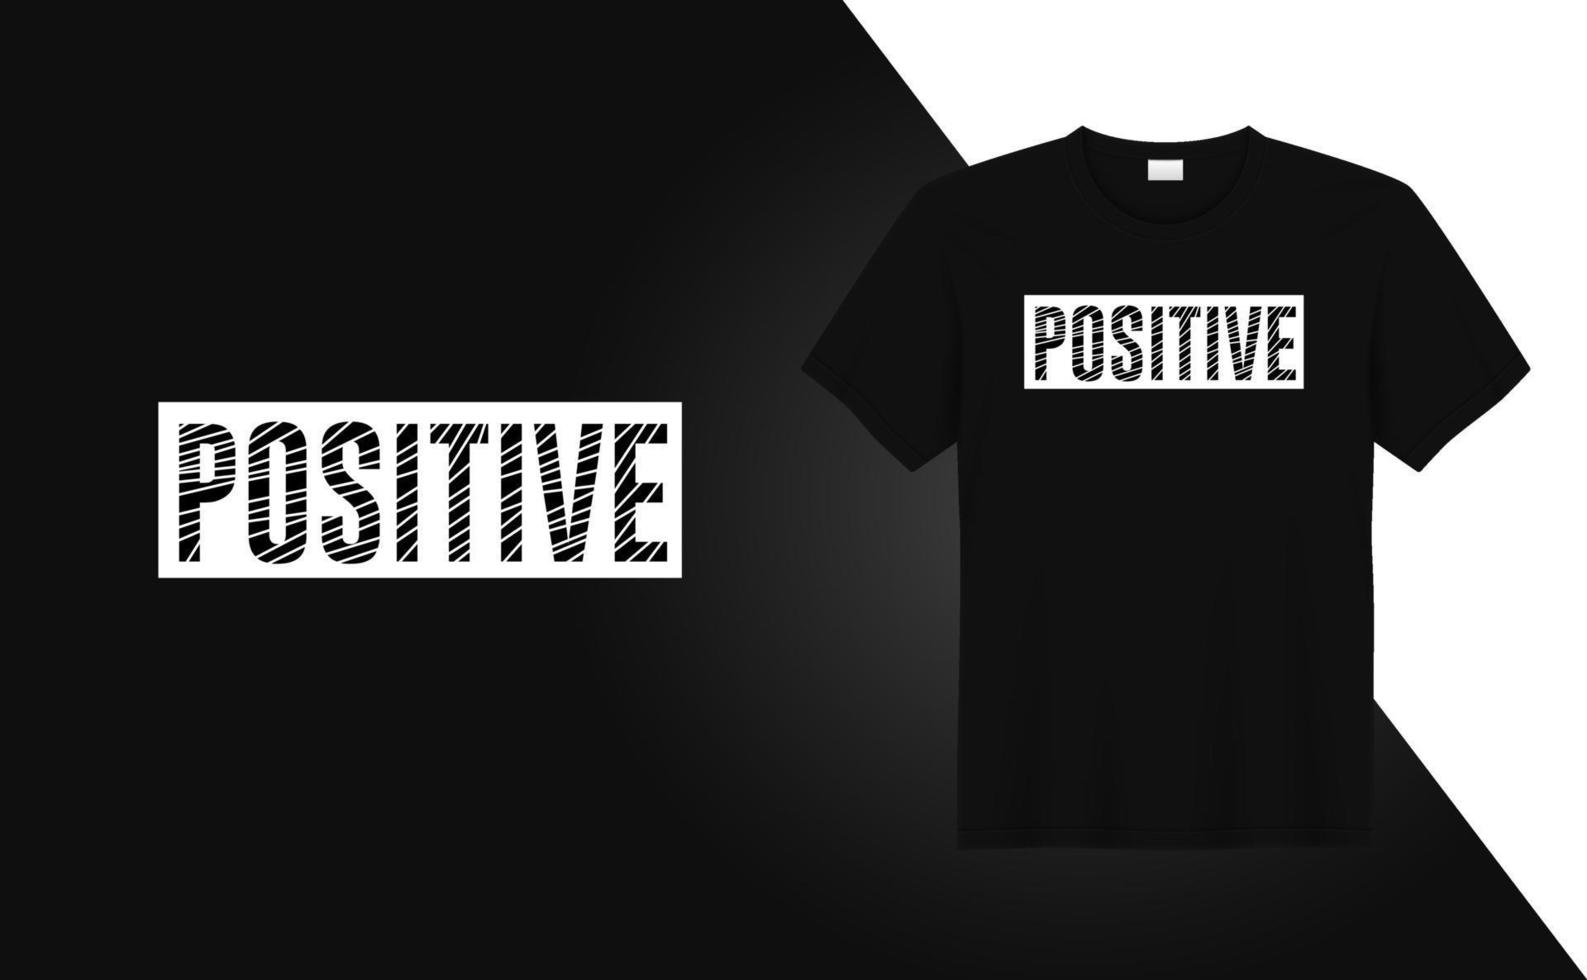 positiv - trendiges Texturmuster Grunge-Effekt-T-Shirt-Design für T-Shirt-Druck, Bekleidungsmode, Poster, Wandkunst. Vektorillustrationskunst für T-Shirt. vektor